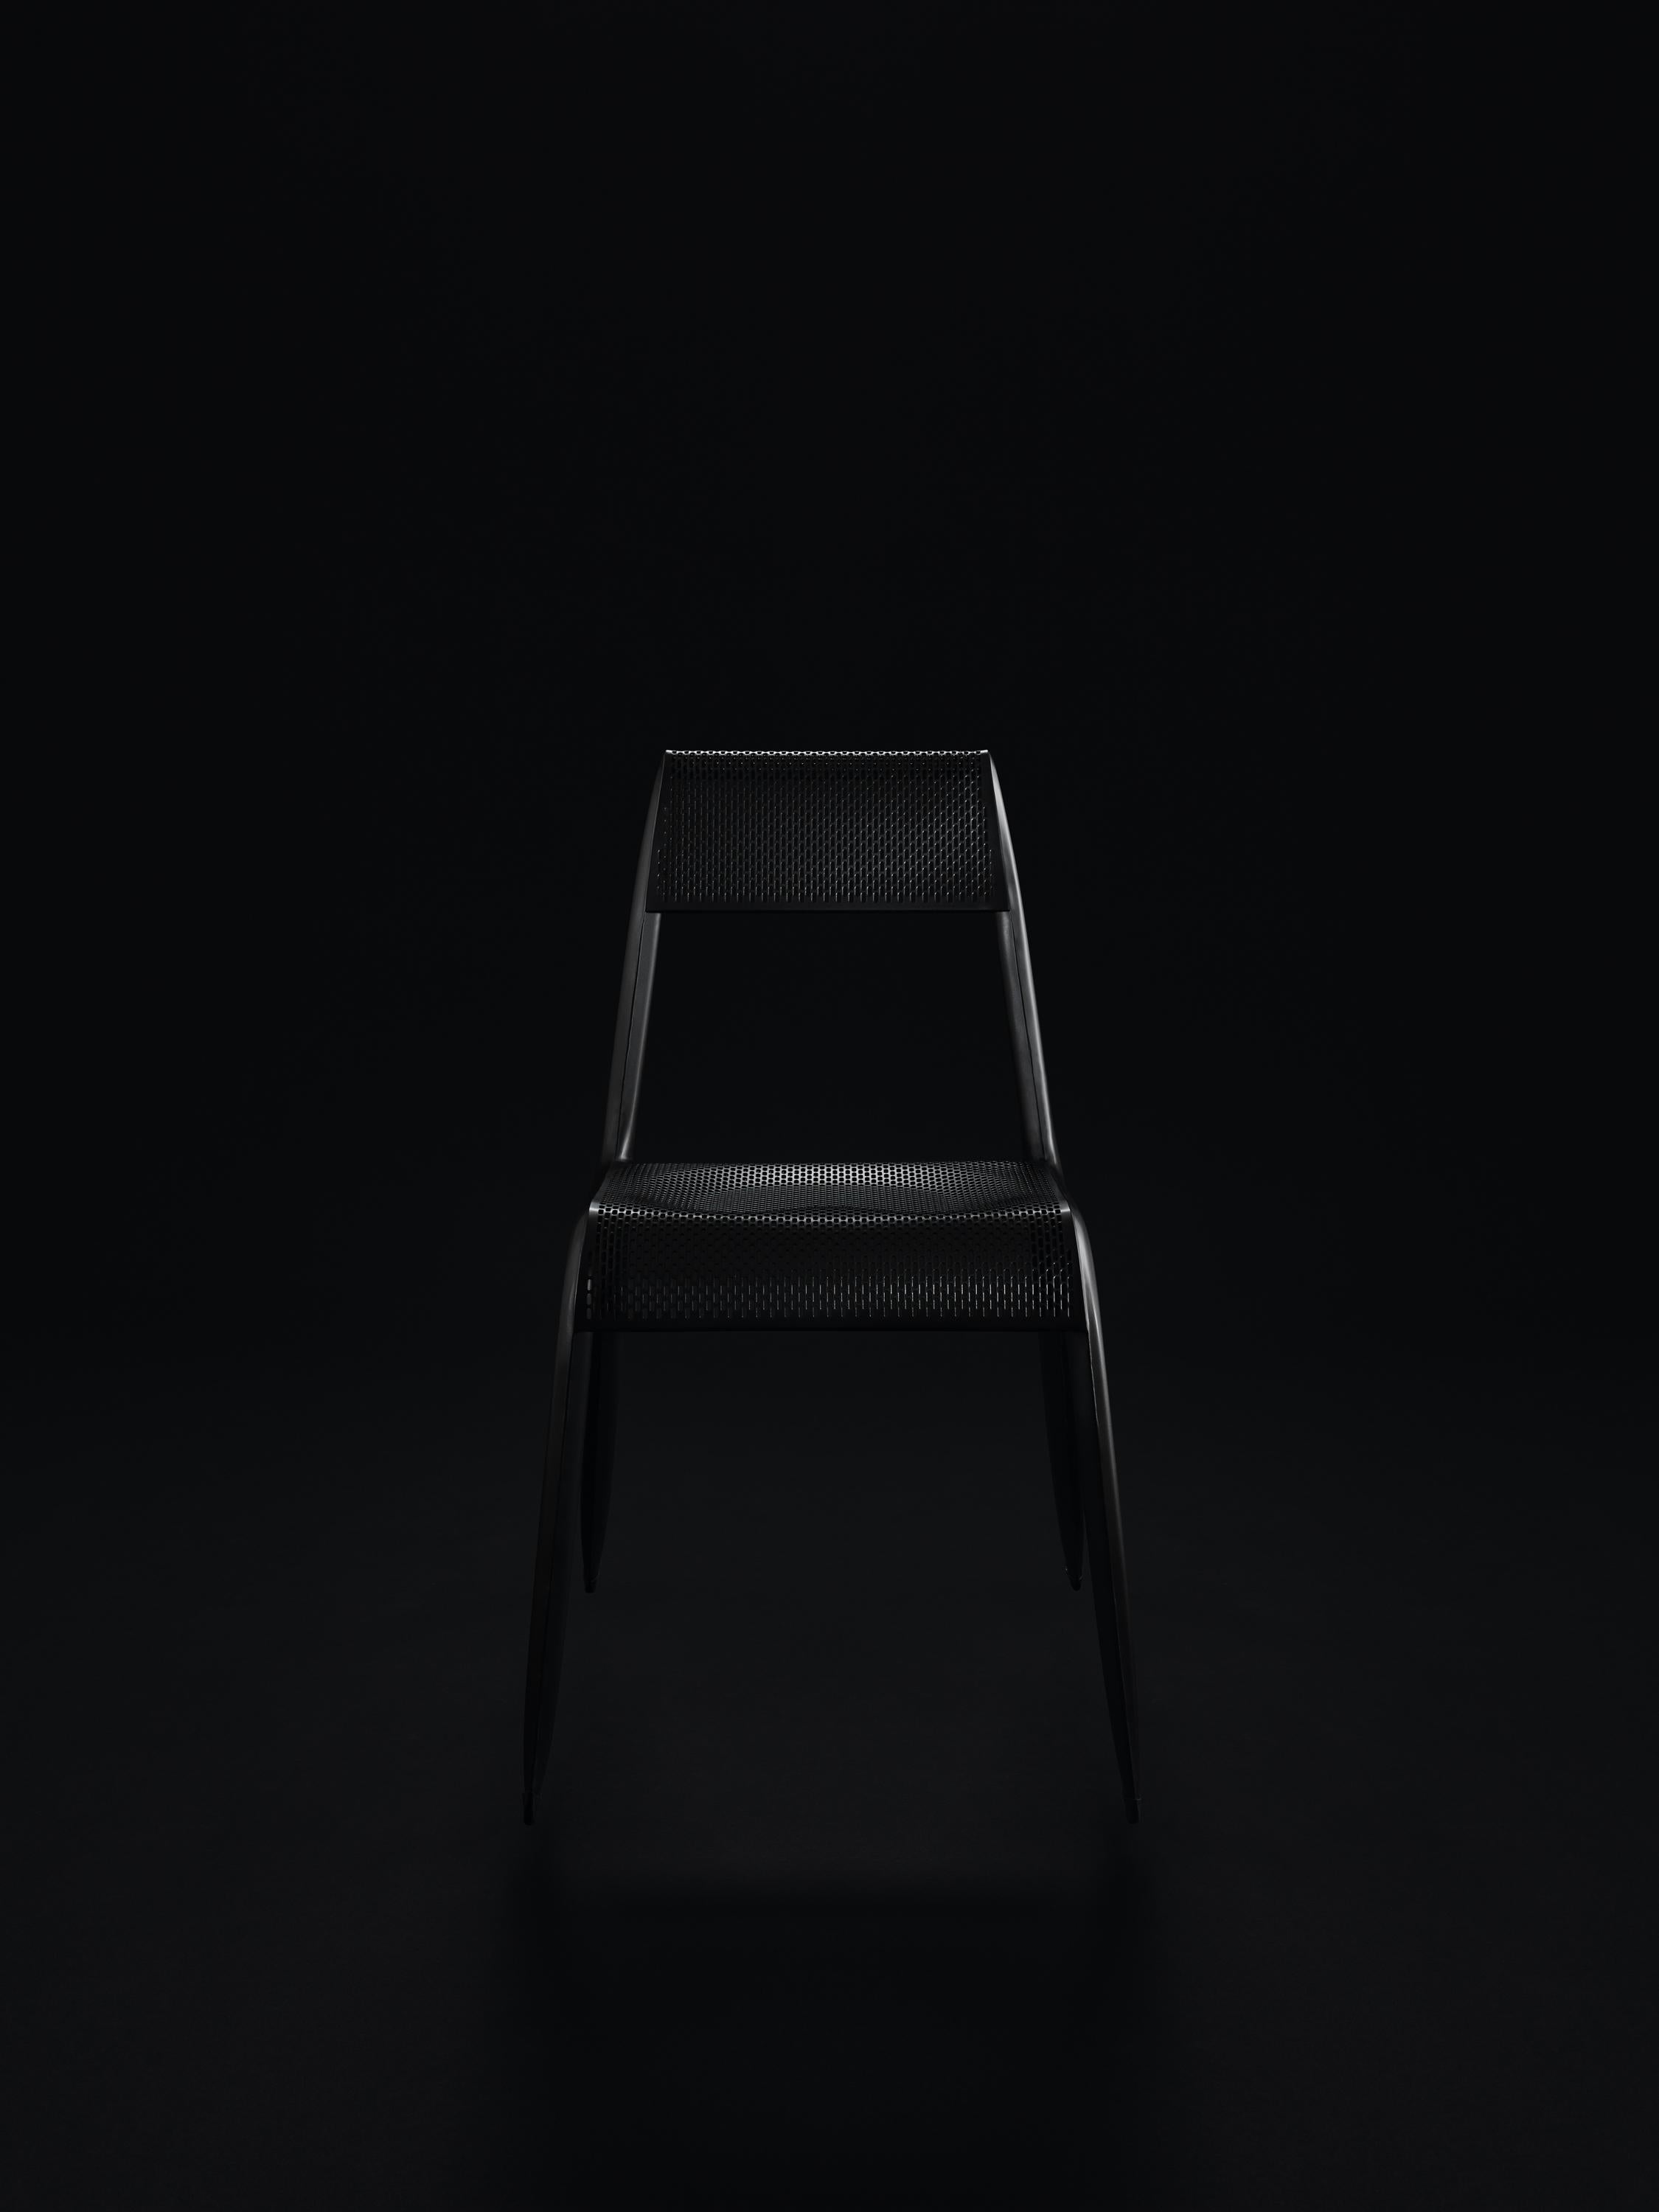 Organic Modern Black Anodic Ultraleggera Chair by Zieta For Sale